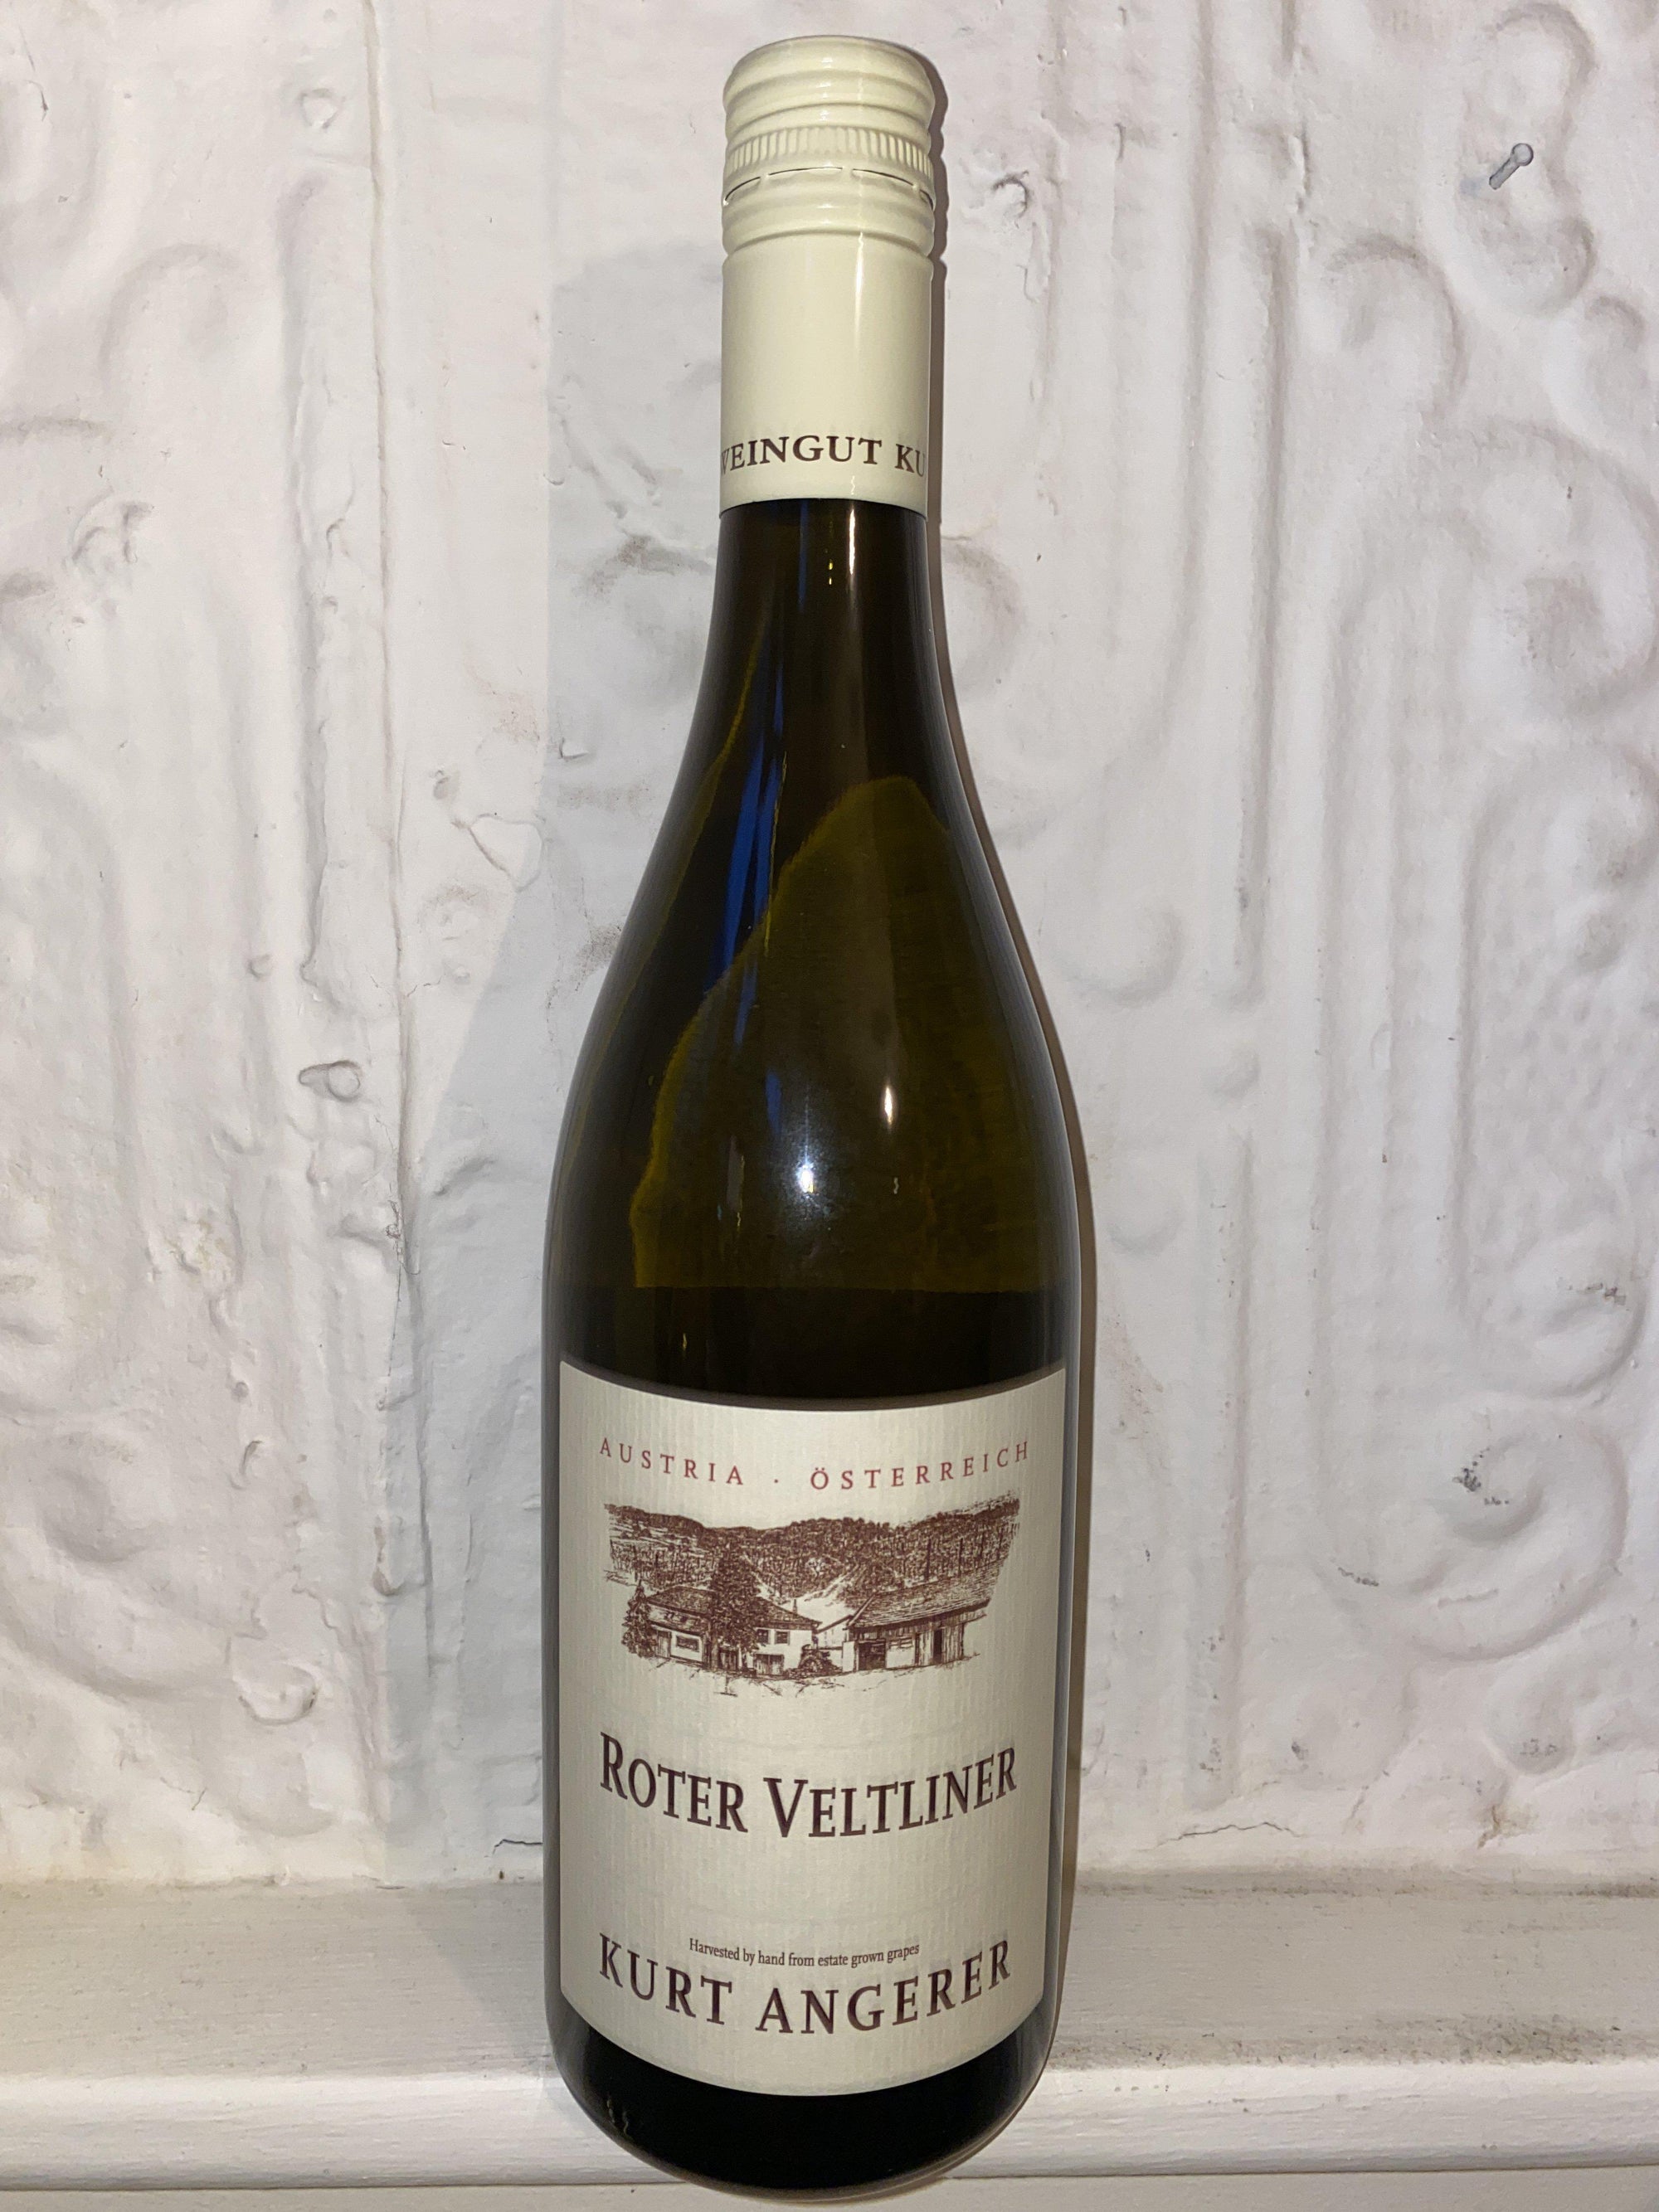 Roter Veltliner, Kurt Angerer 2018 (Niederösterreich, Austria)-Wine-Bibber & Bell